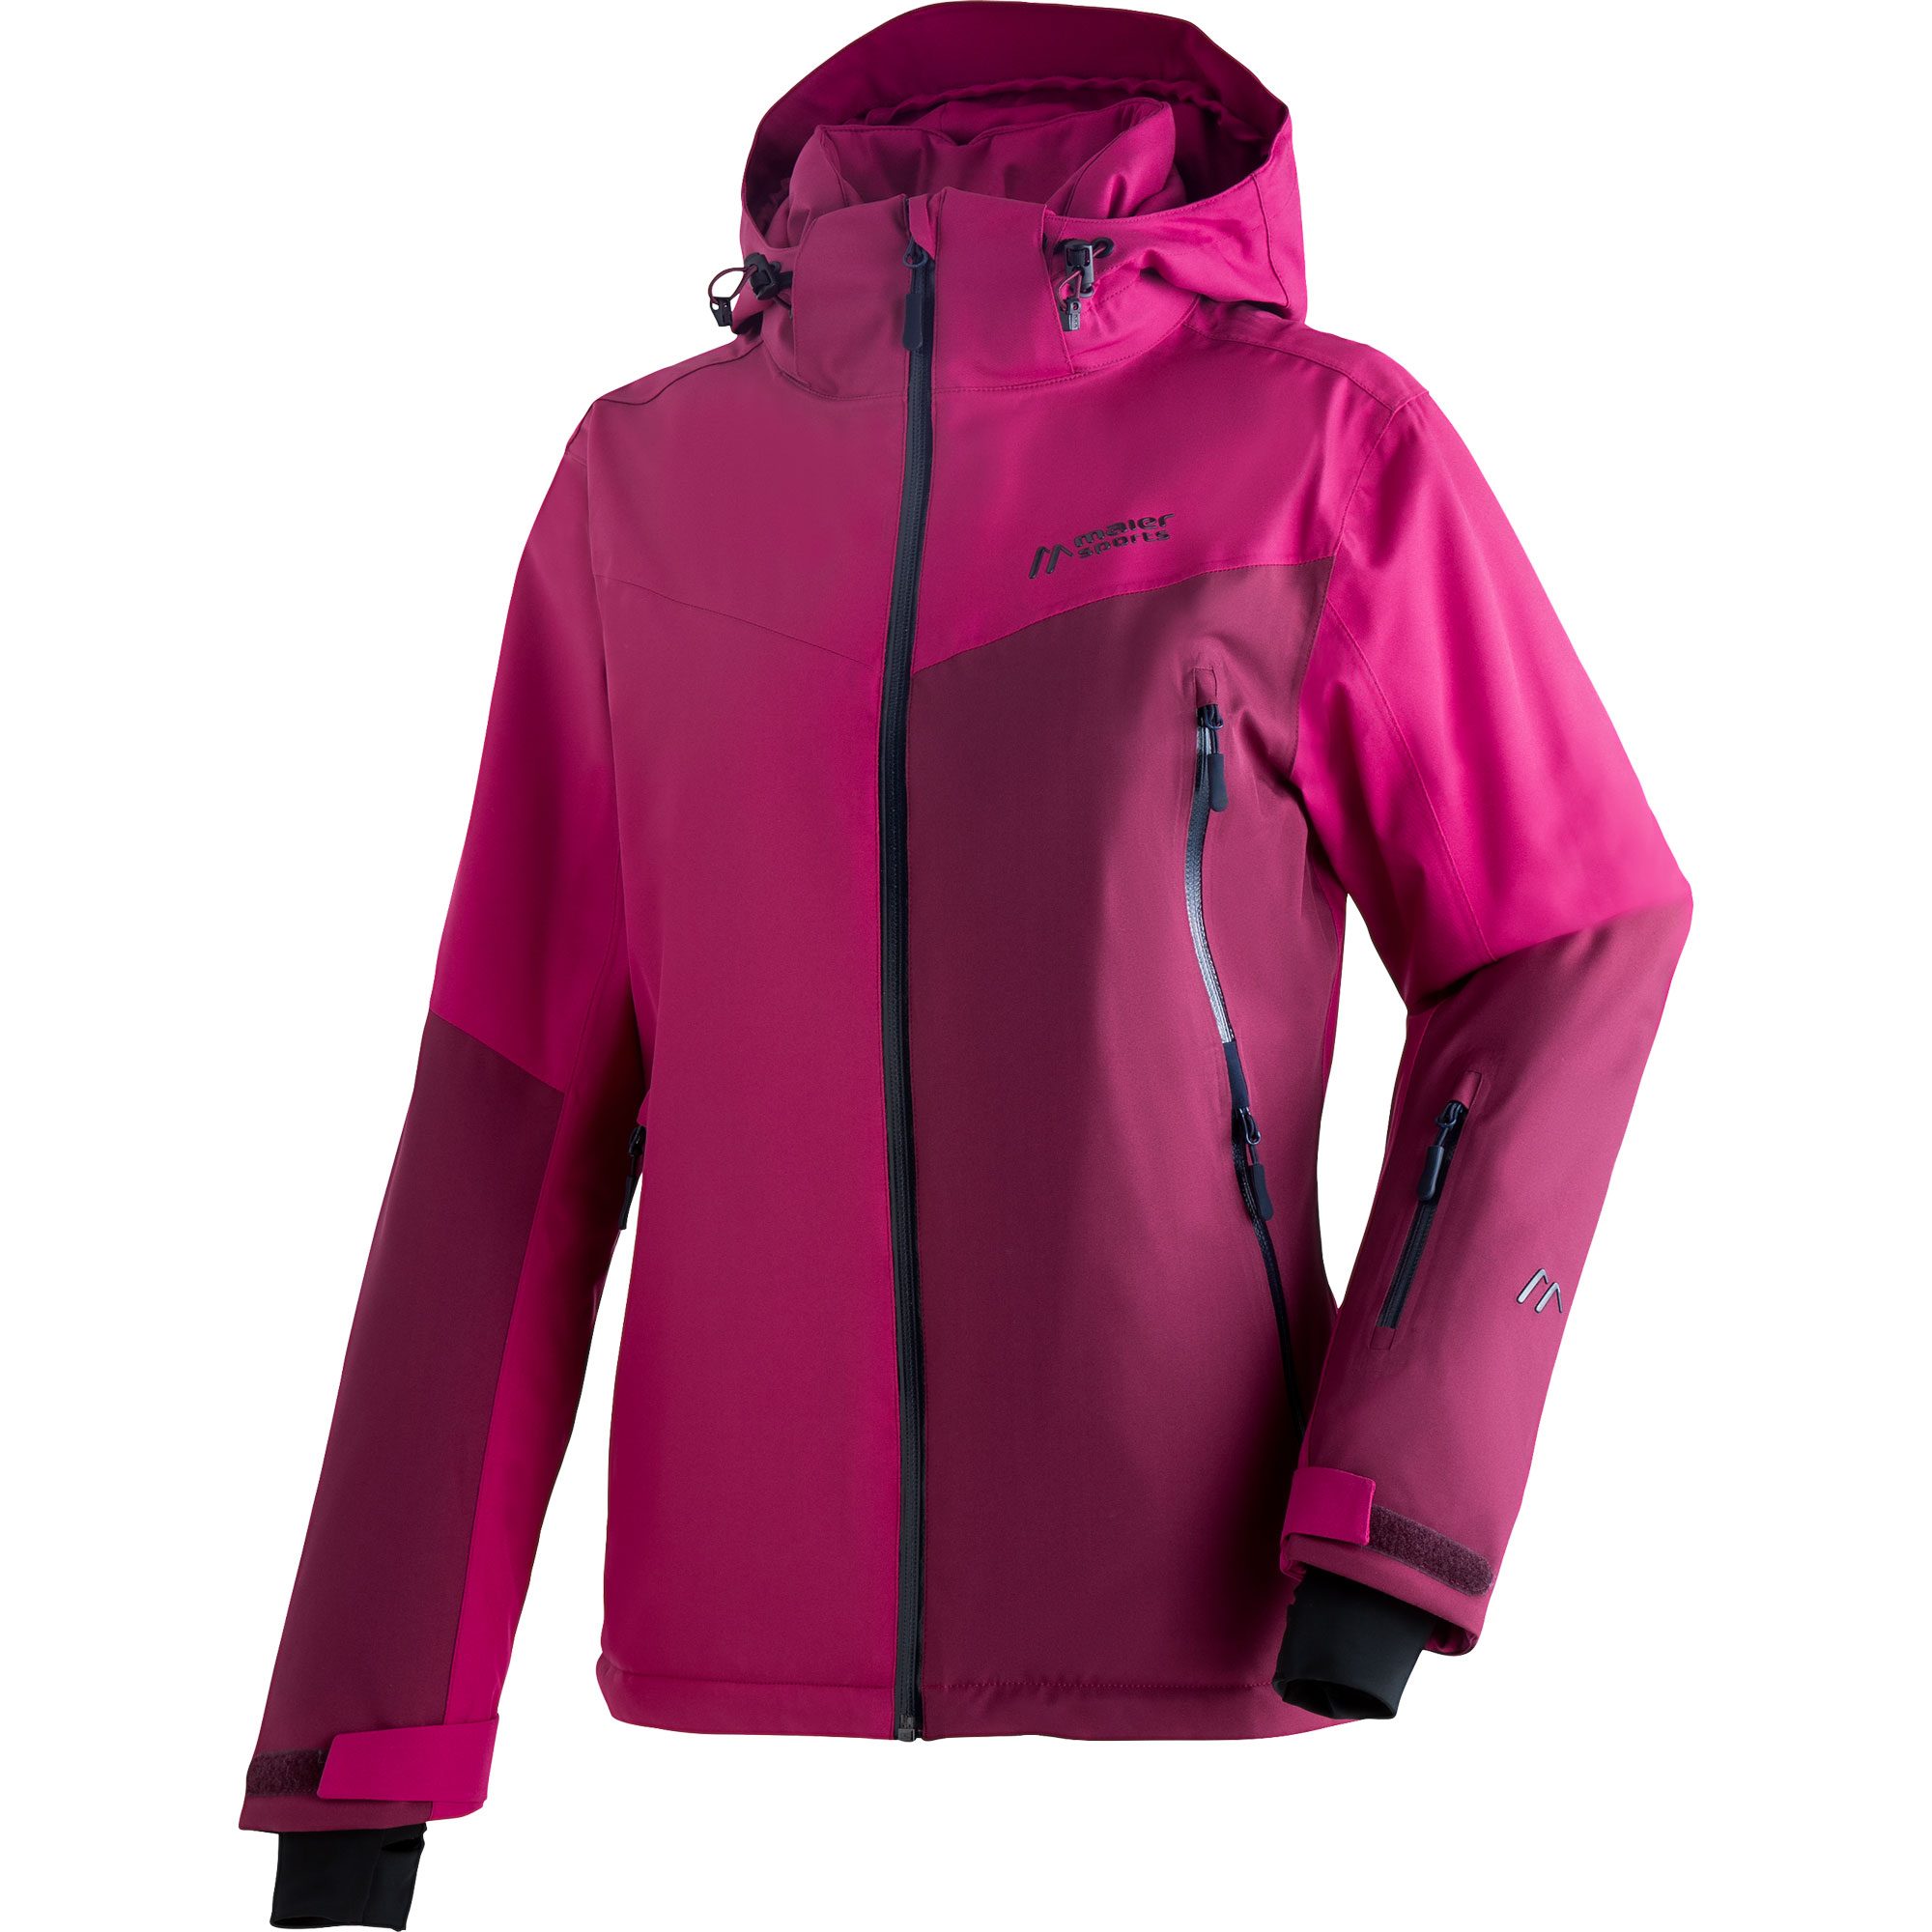 Maier Sports - Nuria Ski Sport at magenta Bittl Women Shop Jacket